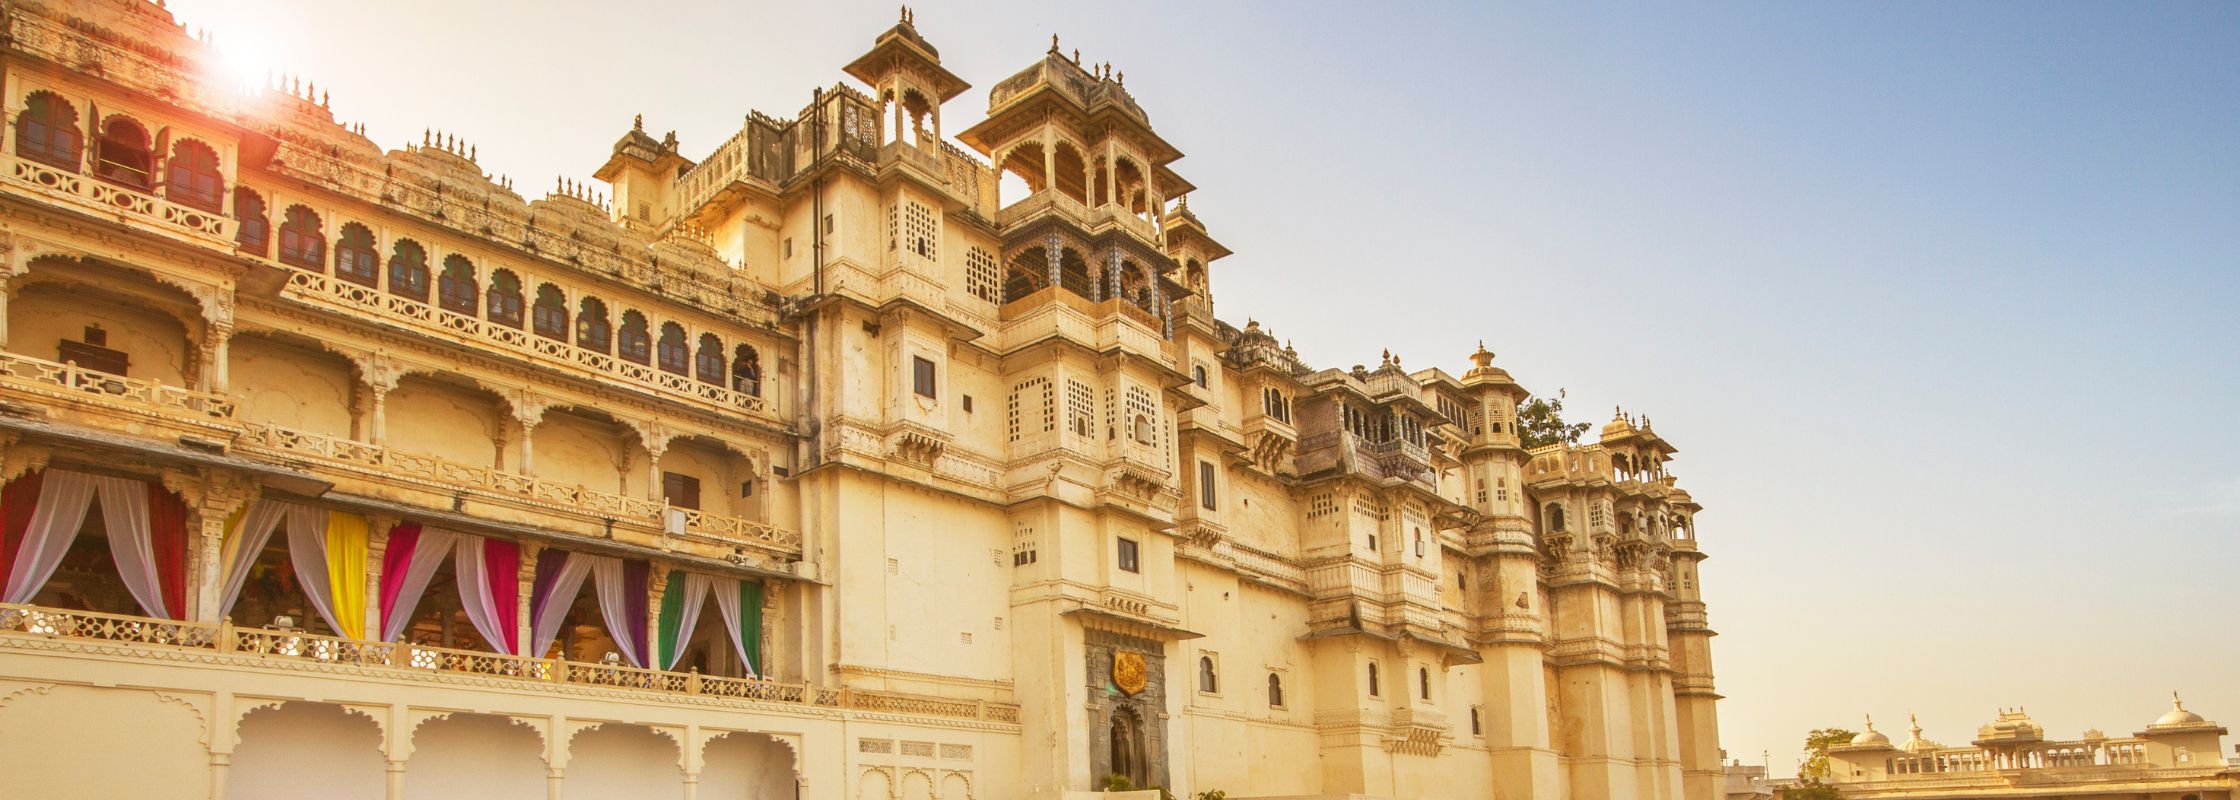 Historical Monuments of Jaipur Rajasthan